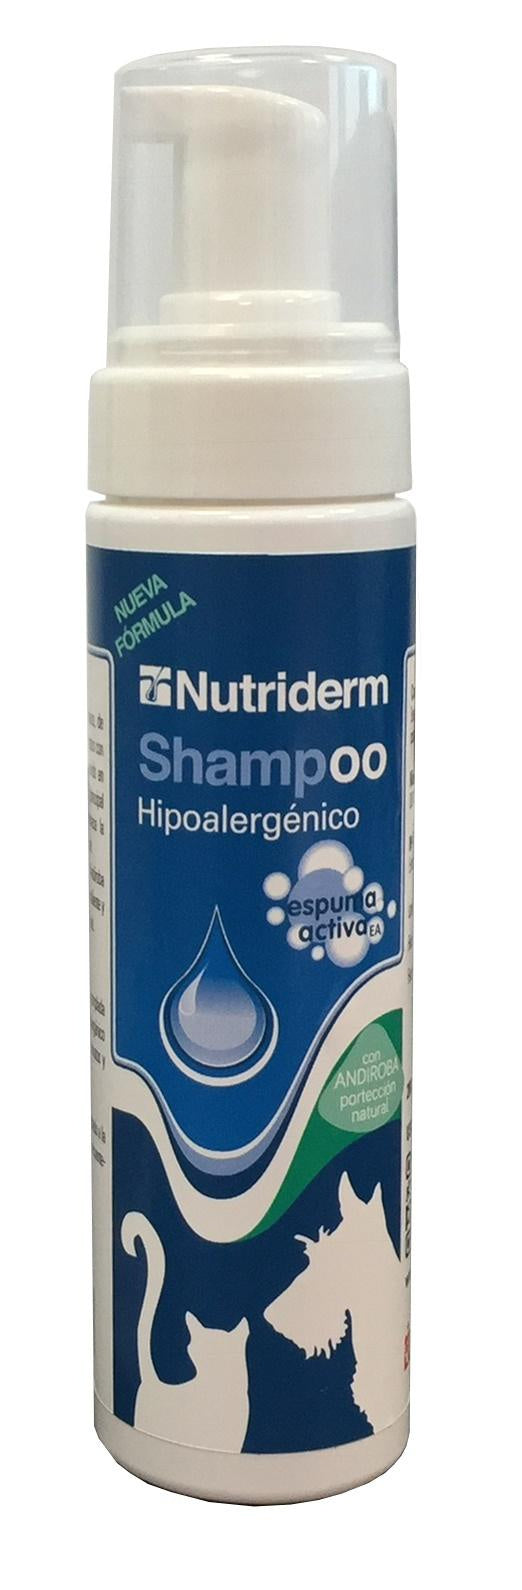 Nutriderm Shampoo Fisiologico Hipoalergenico, 200 ml